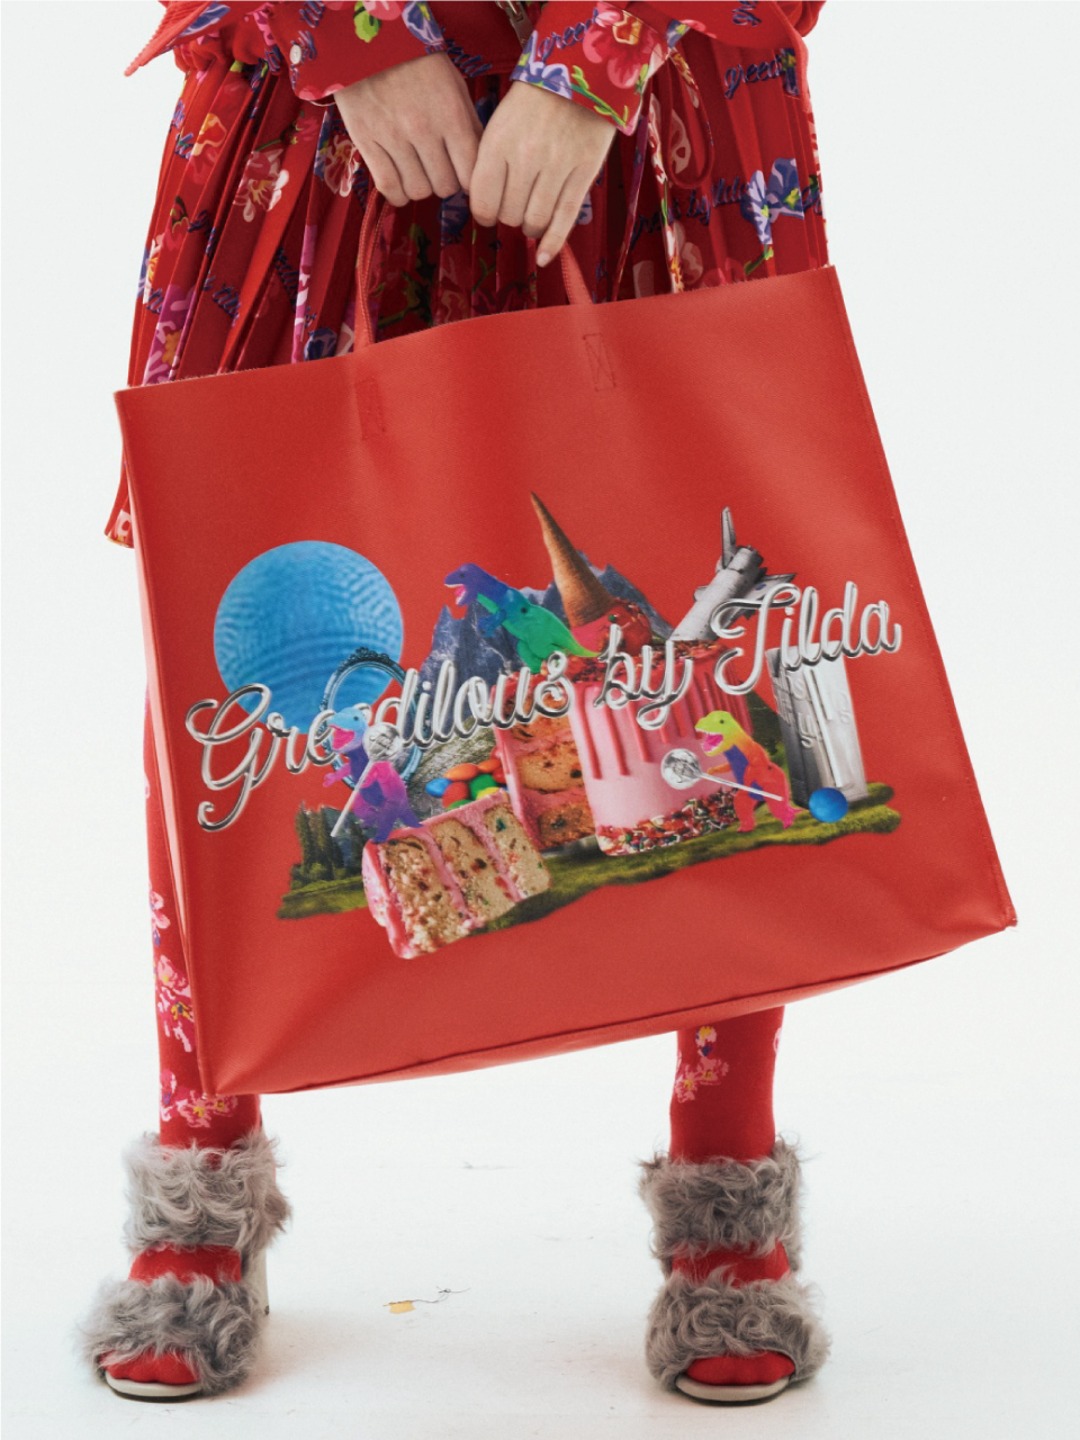 GREEDILOUS By Tilda Canvas Tote Bag